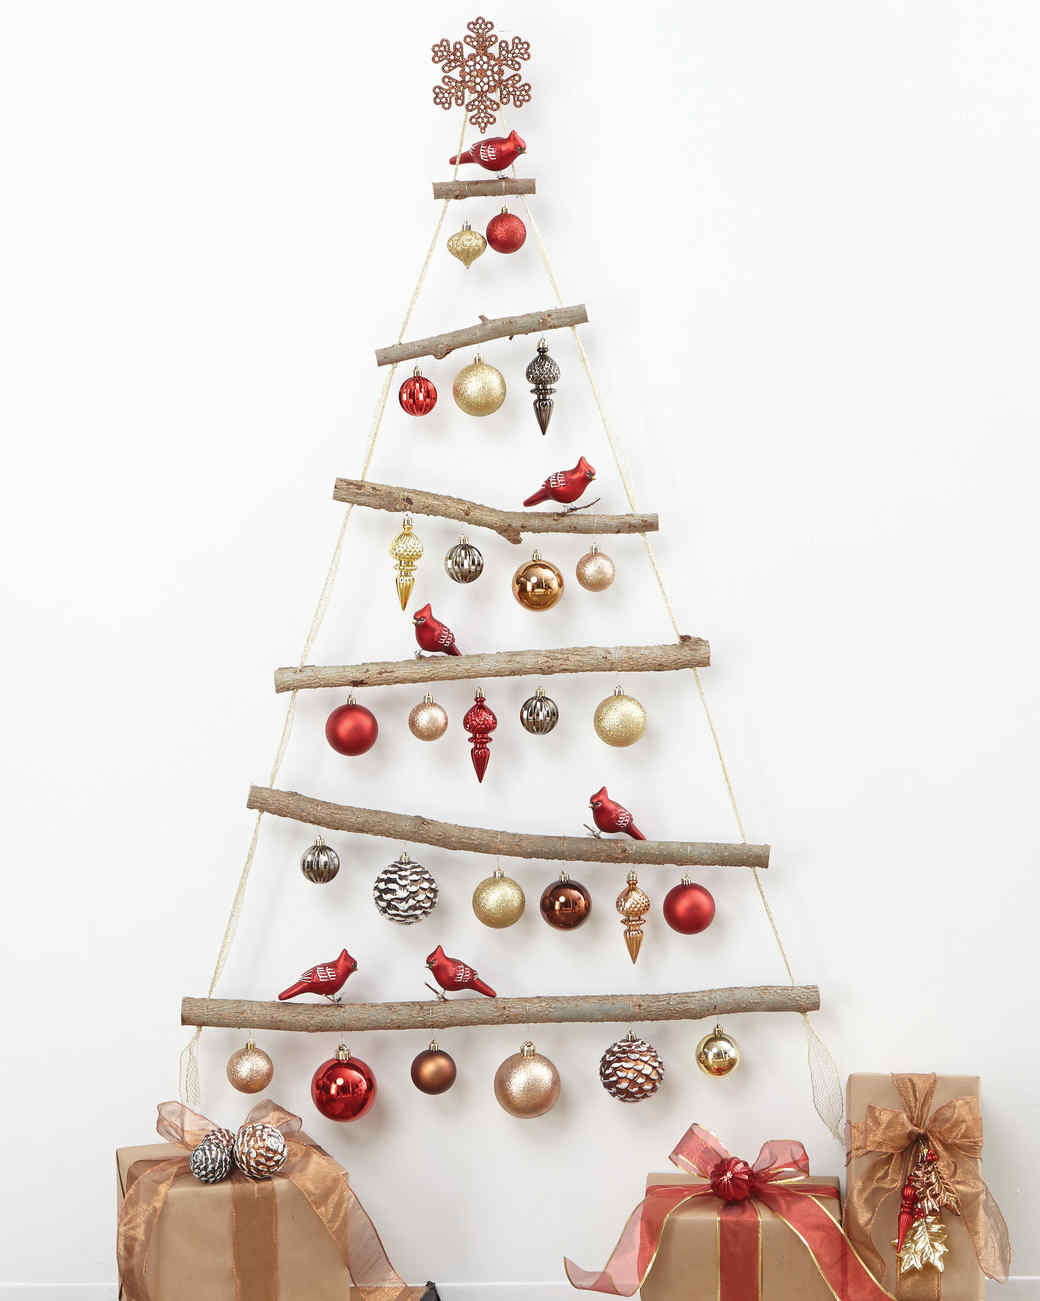 DIY Christmas Ornaments Martha Stewart
 DIY Christmas Tree How to Make the Ornaments the